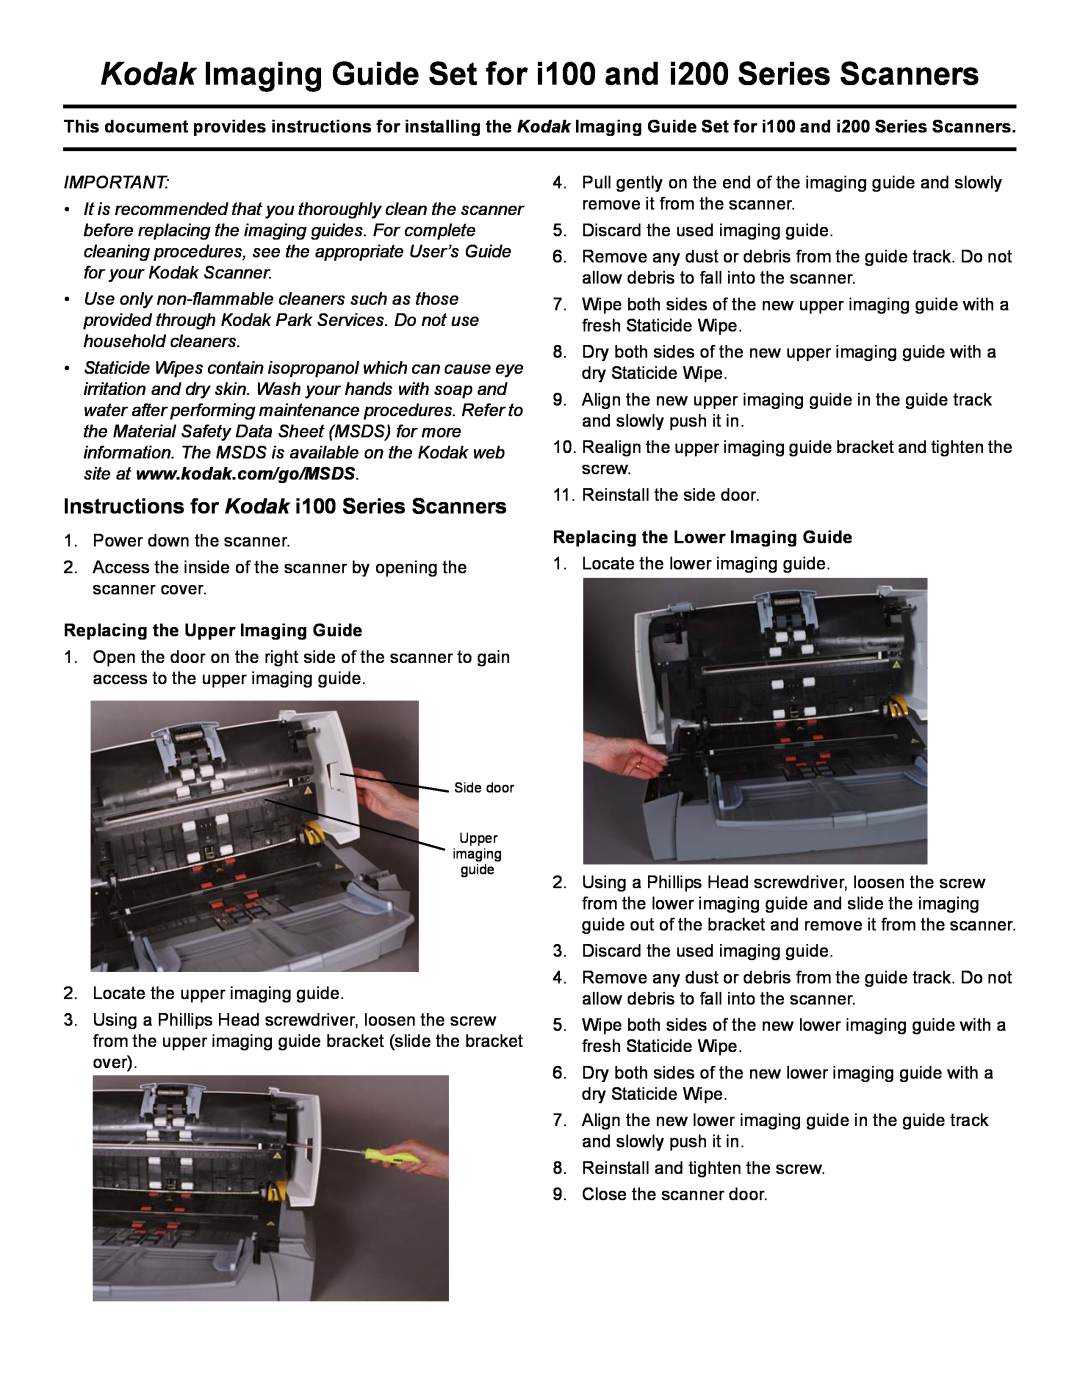 Kodak I200 manual Instructions for Kodak i100 Series Scanners, Replacing the Upper Imaging Guide 